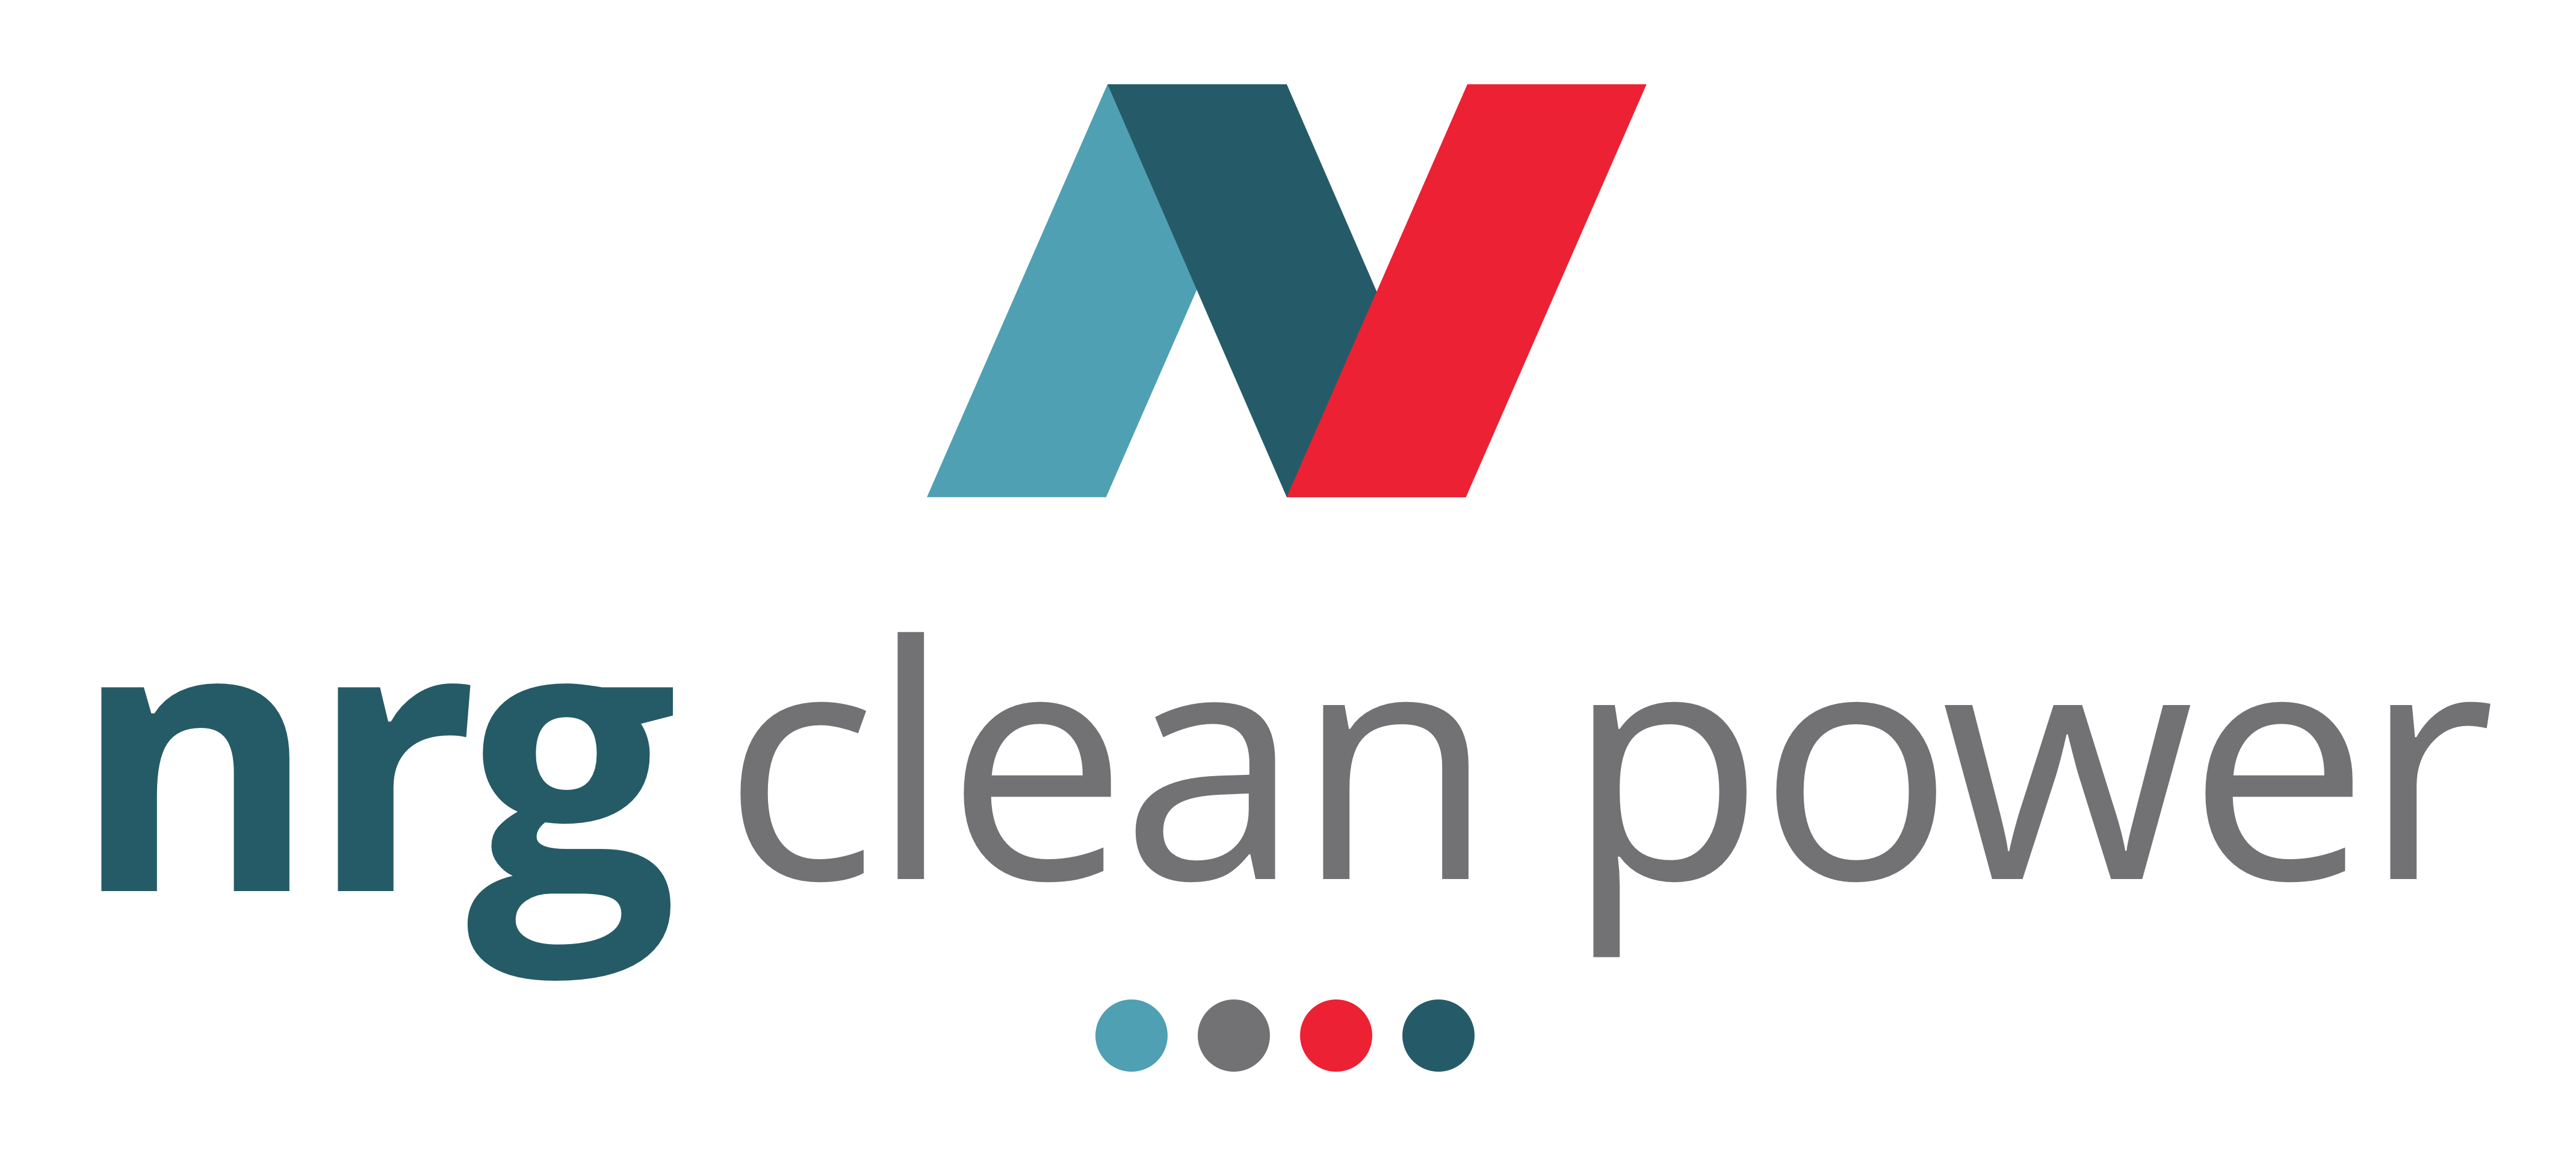 NRG Clean Power logo